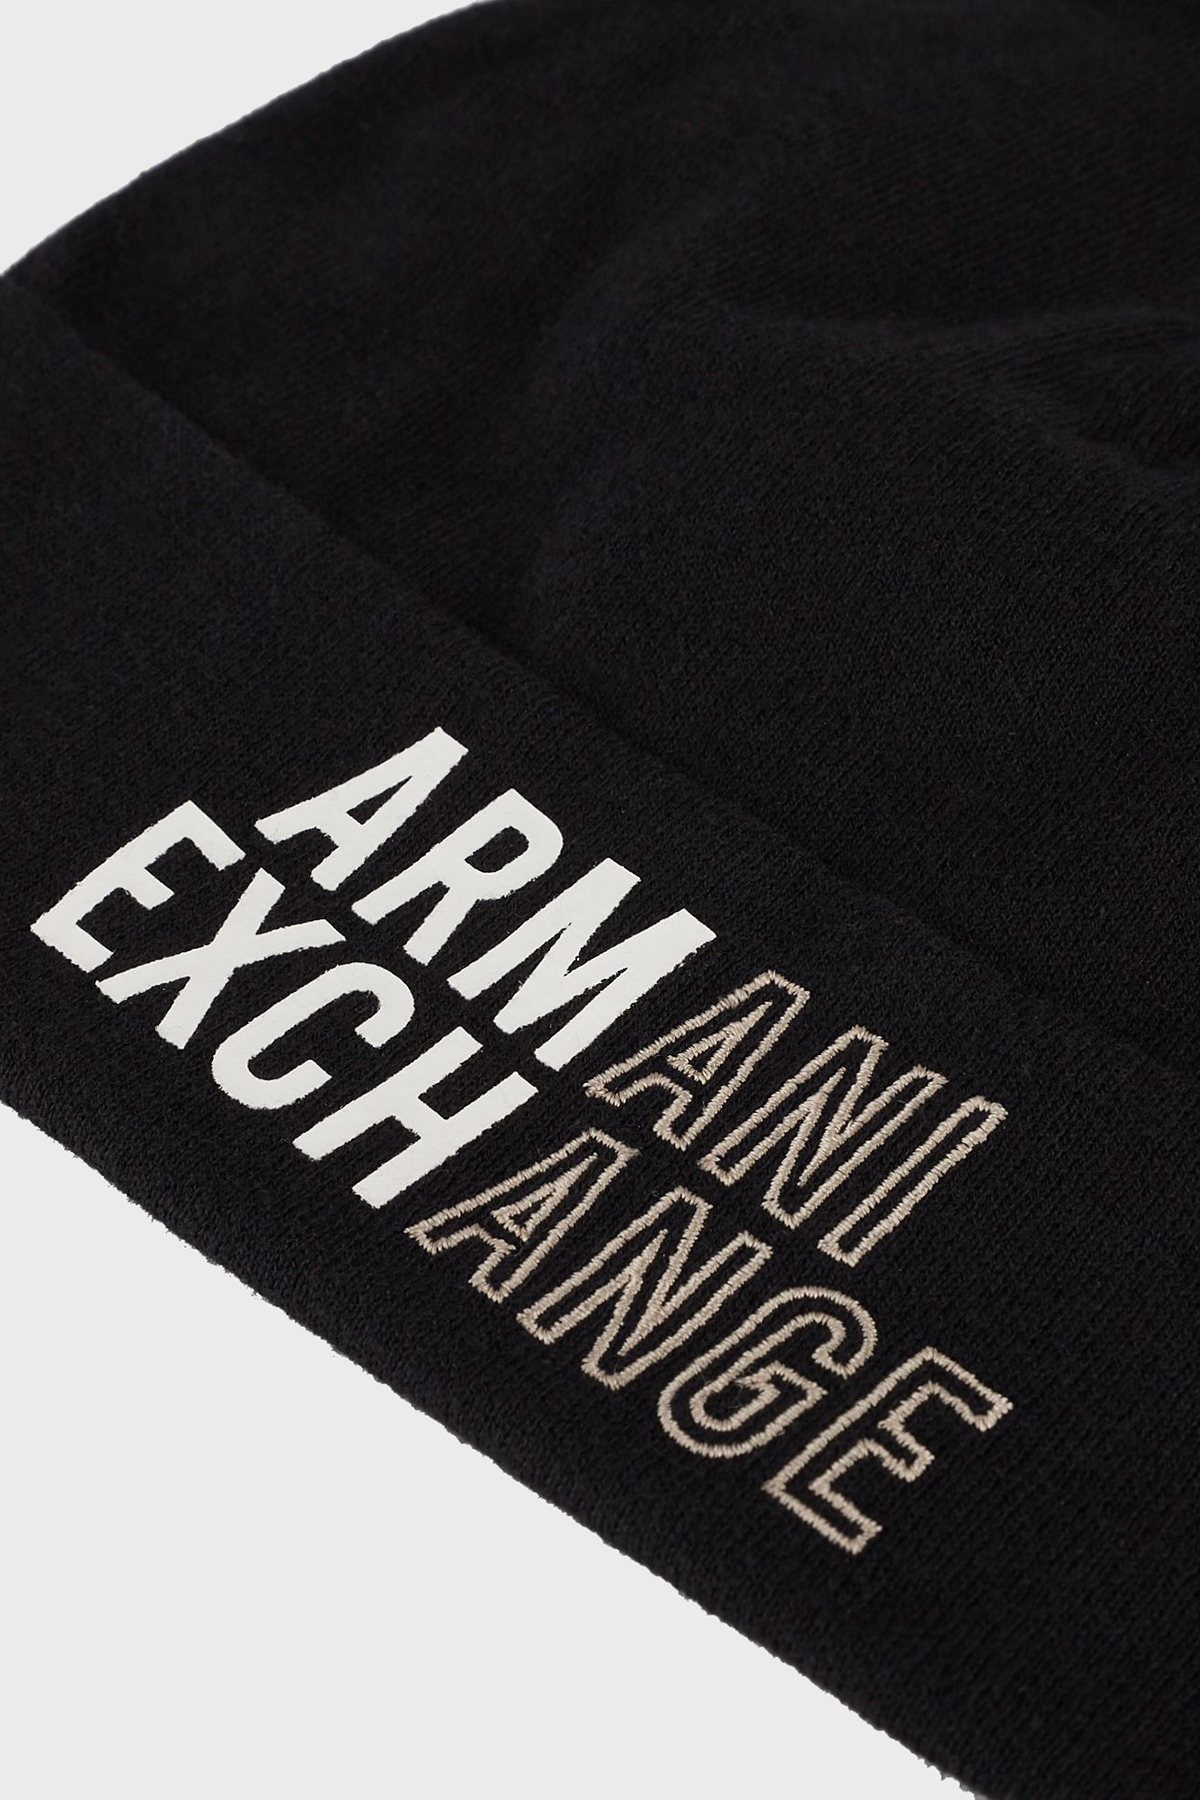 Armani Exchange Logolu % 100 Pamuk Erkek Şapka 954660 1A300 00020 SİYAH